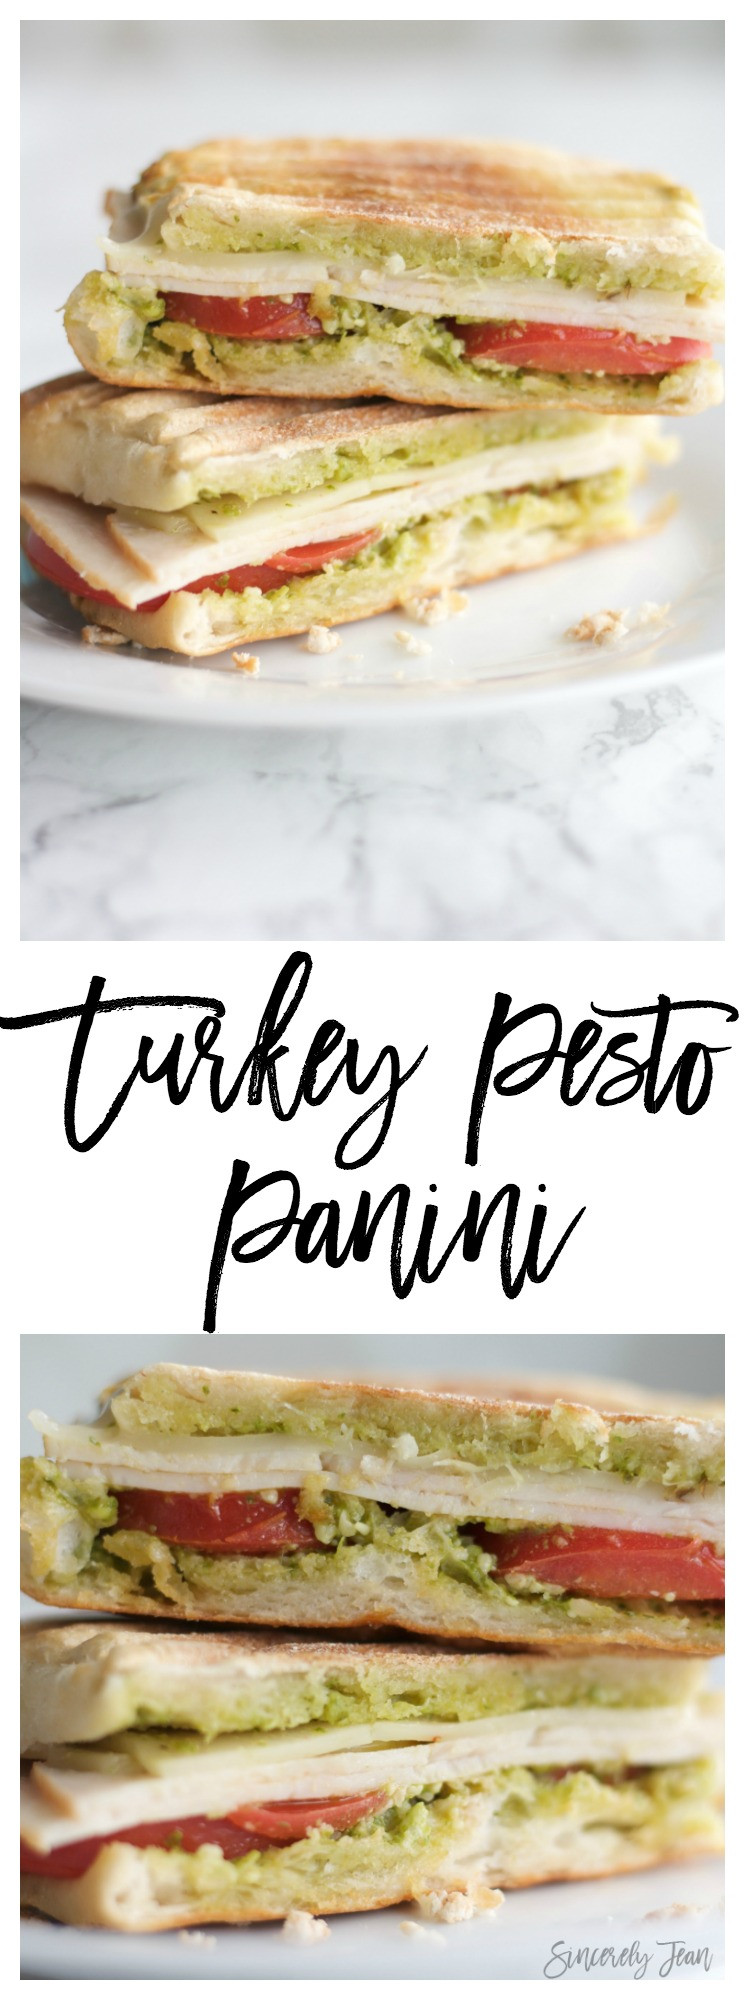 Turkey Panini Sandwich Recipe
 Turkey Pesto Panini Sincerely Jean